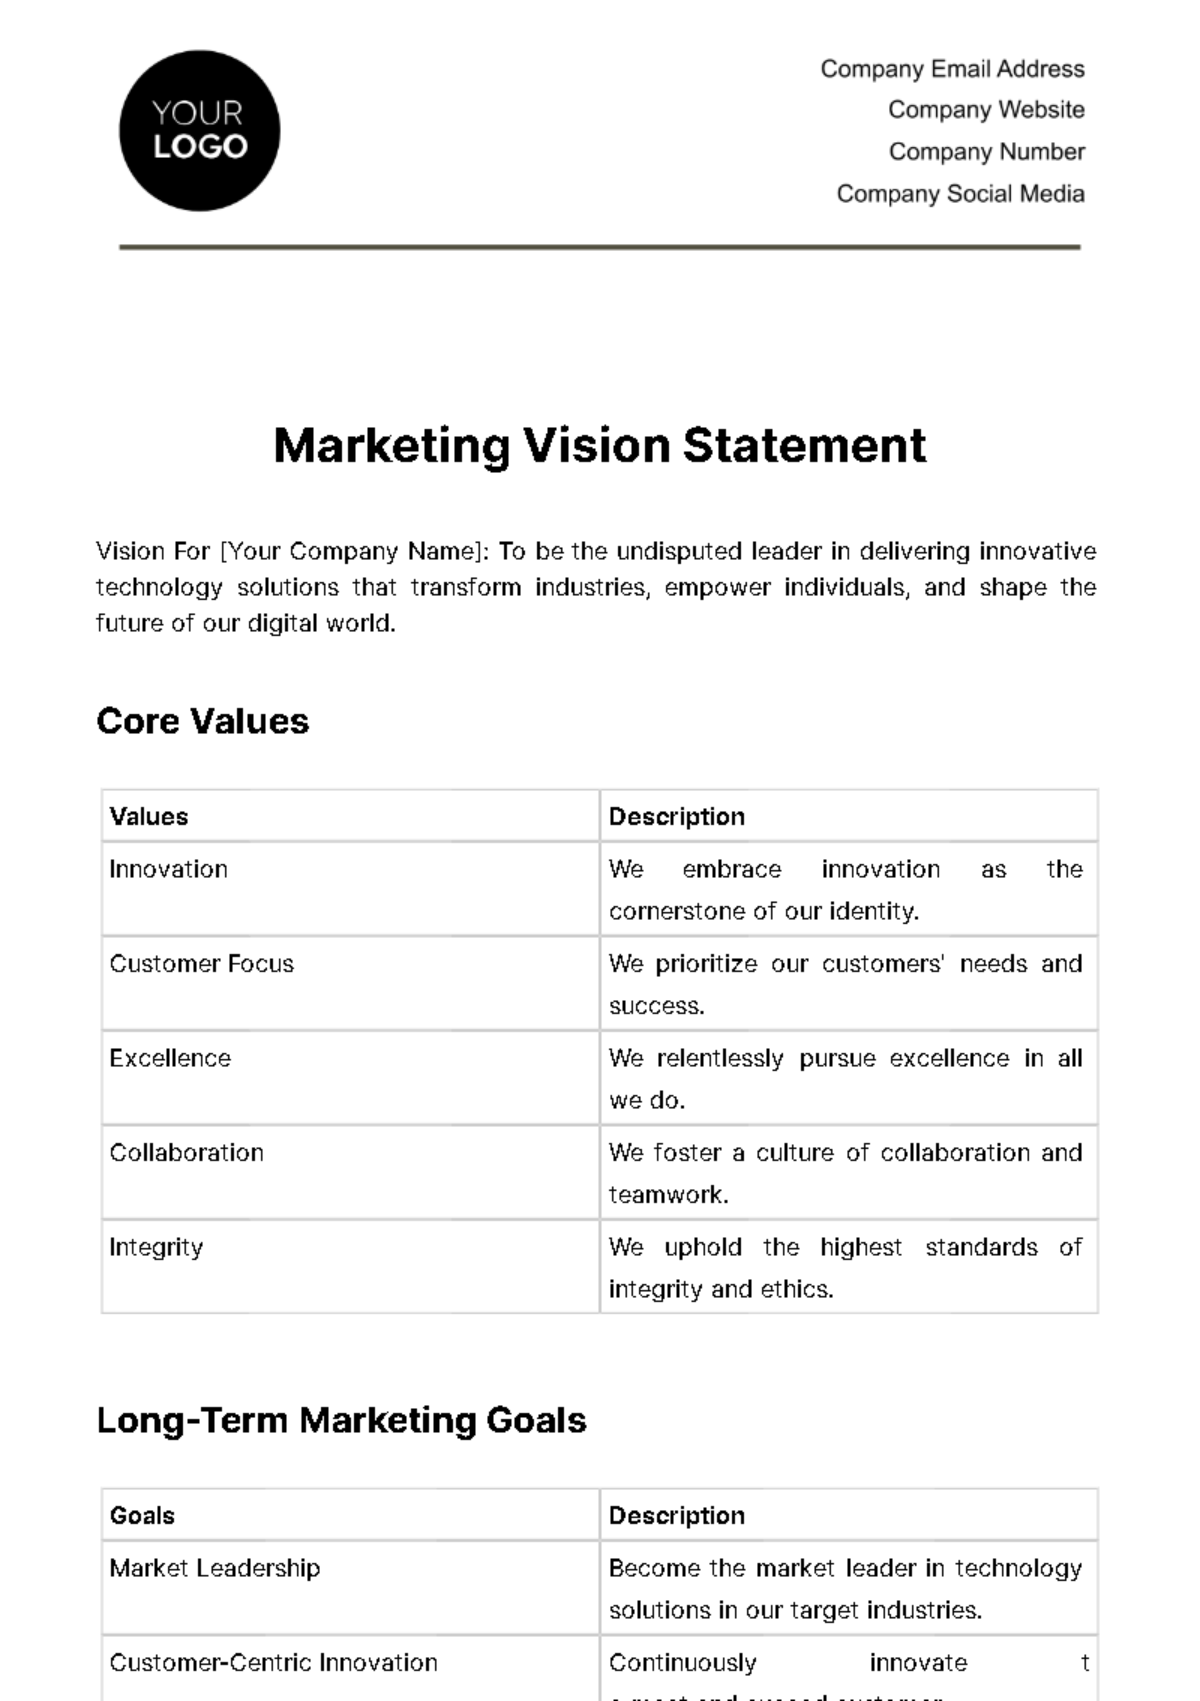 Marketing Vision Statement Template